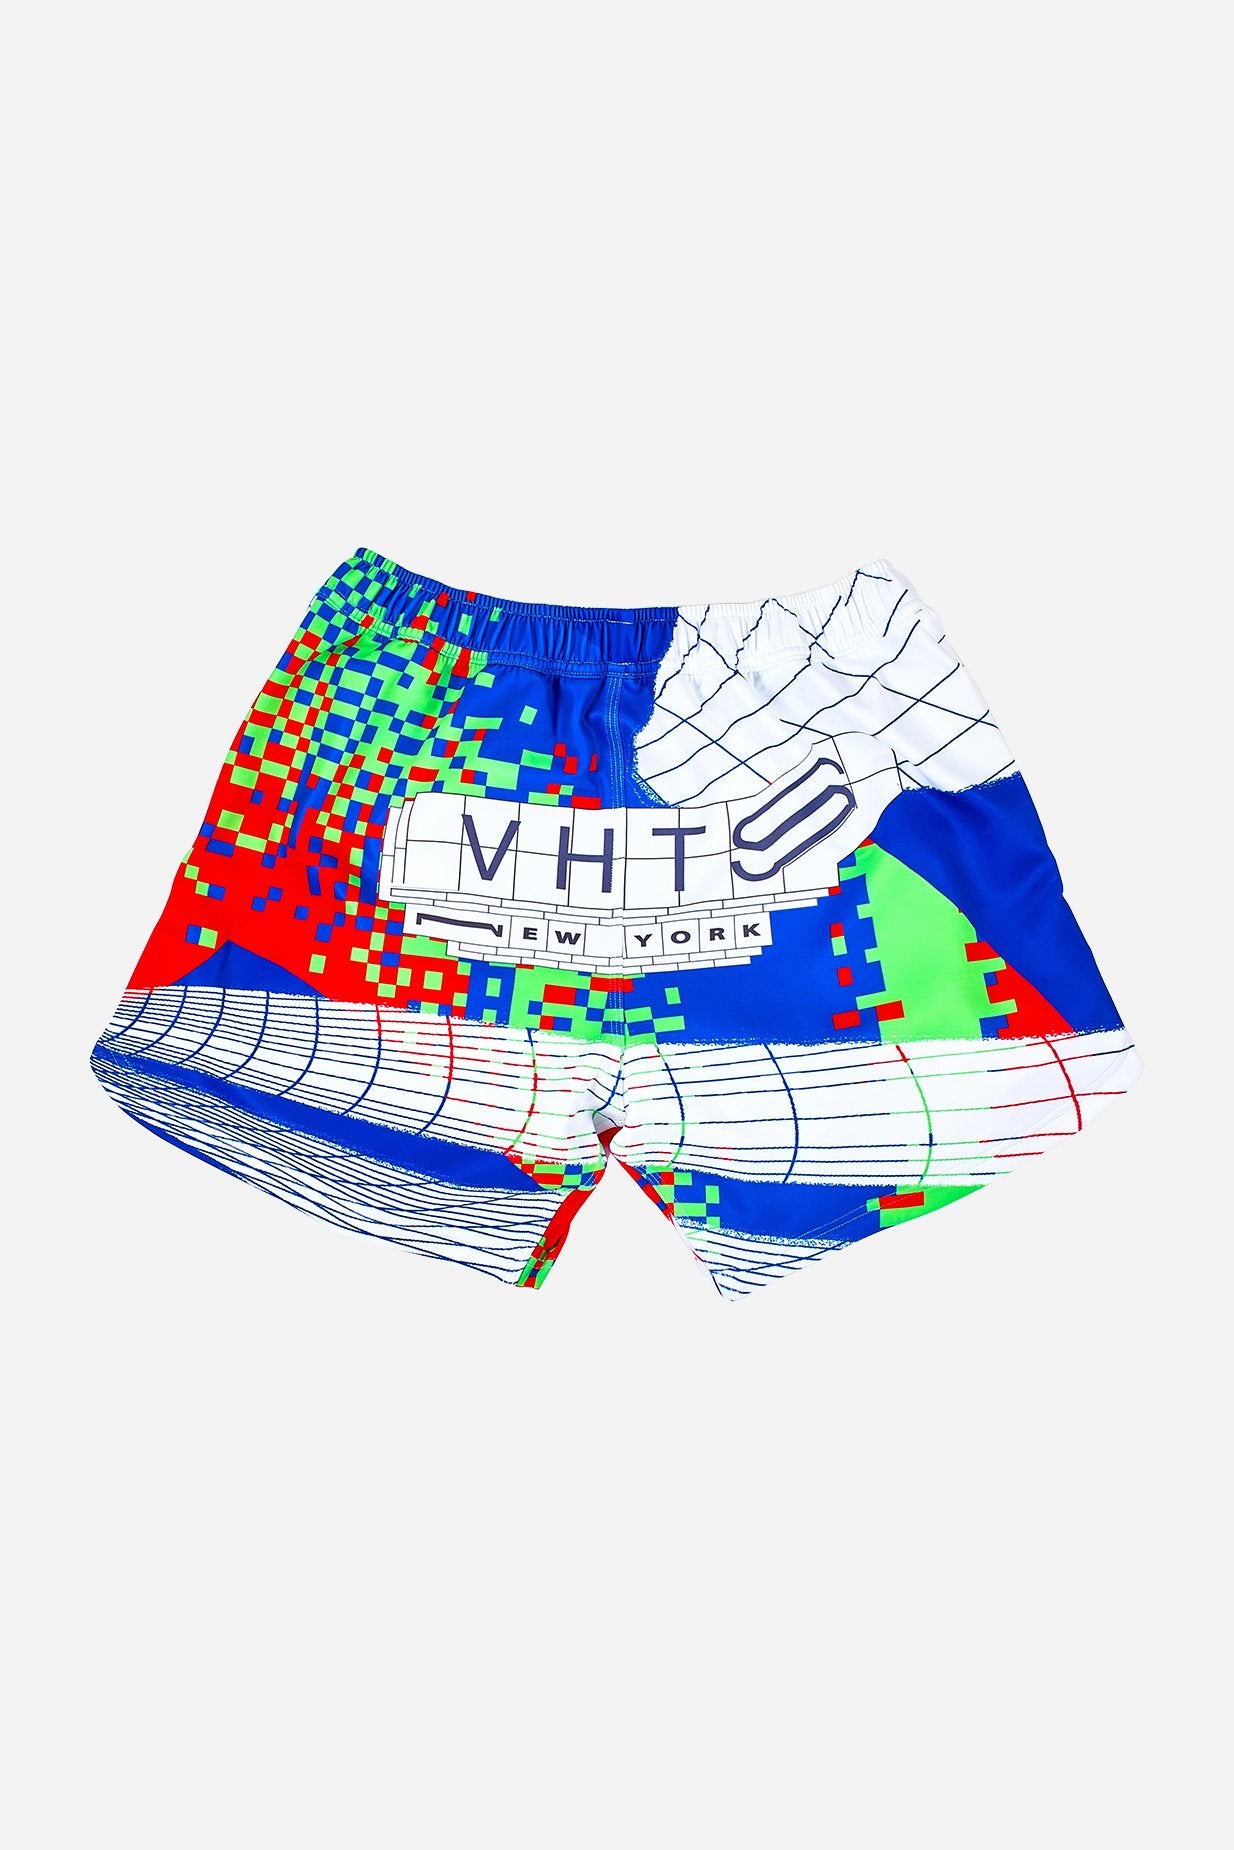 J. Demsky x VHTS collaboration Combat shorts